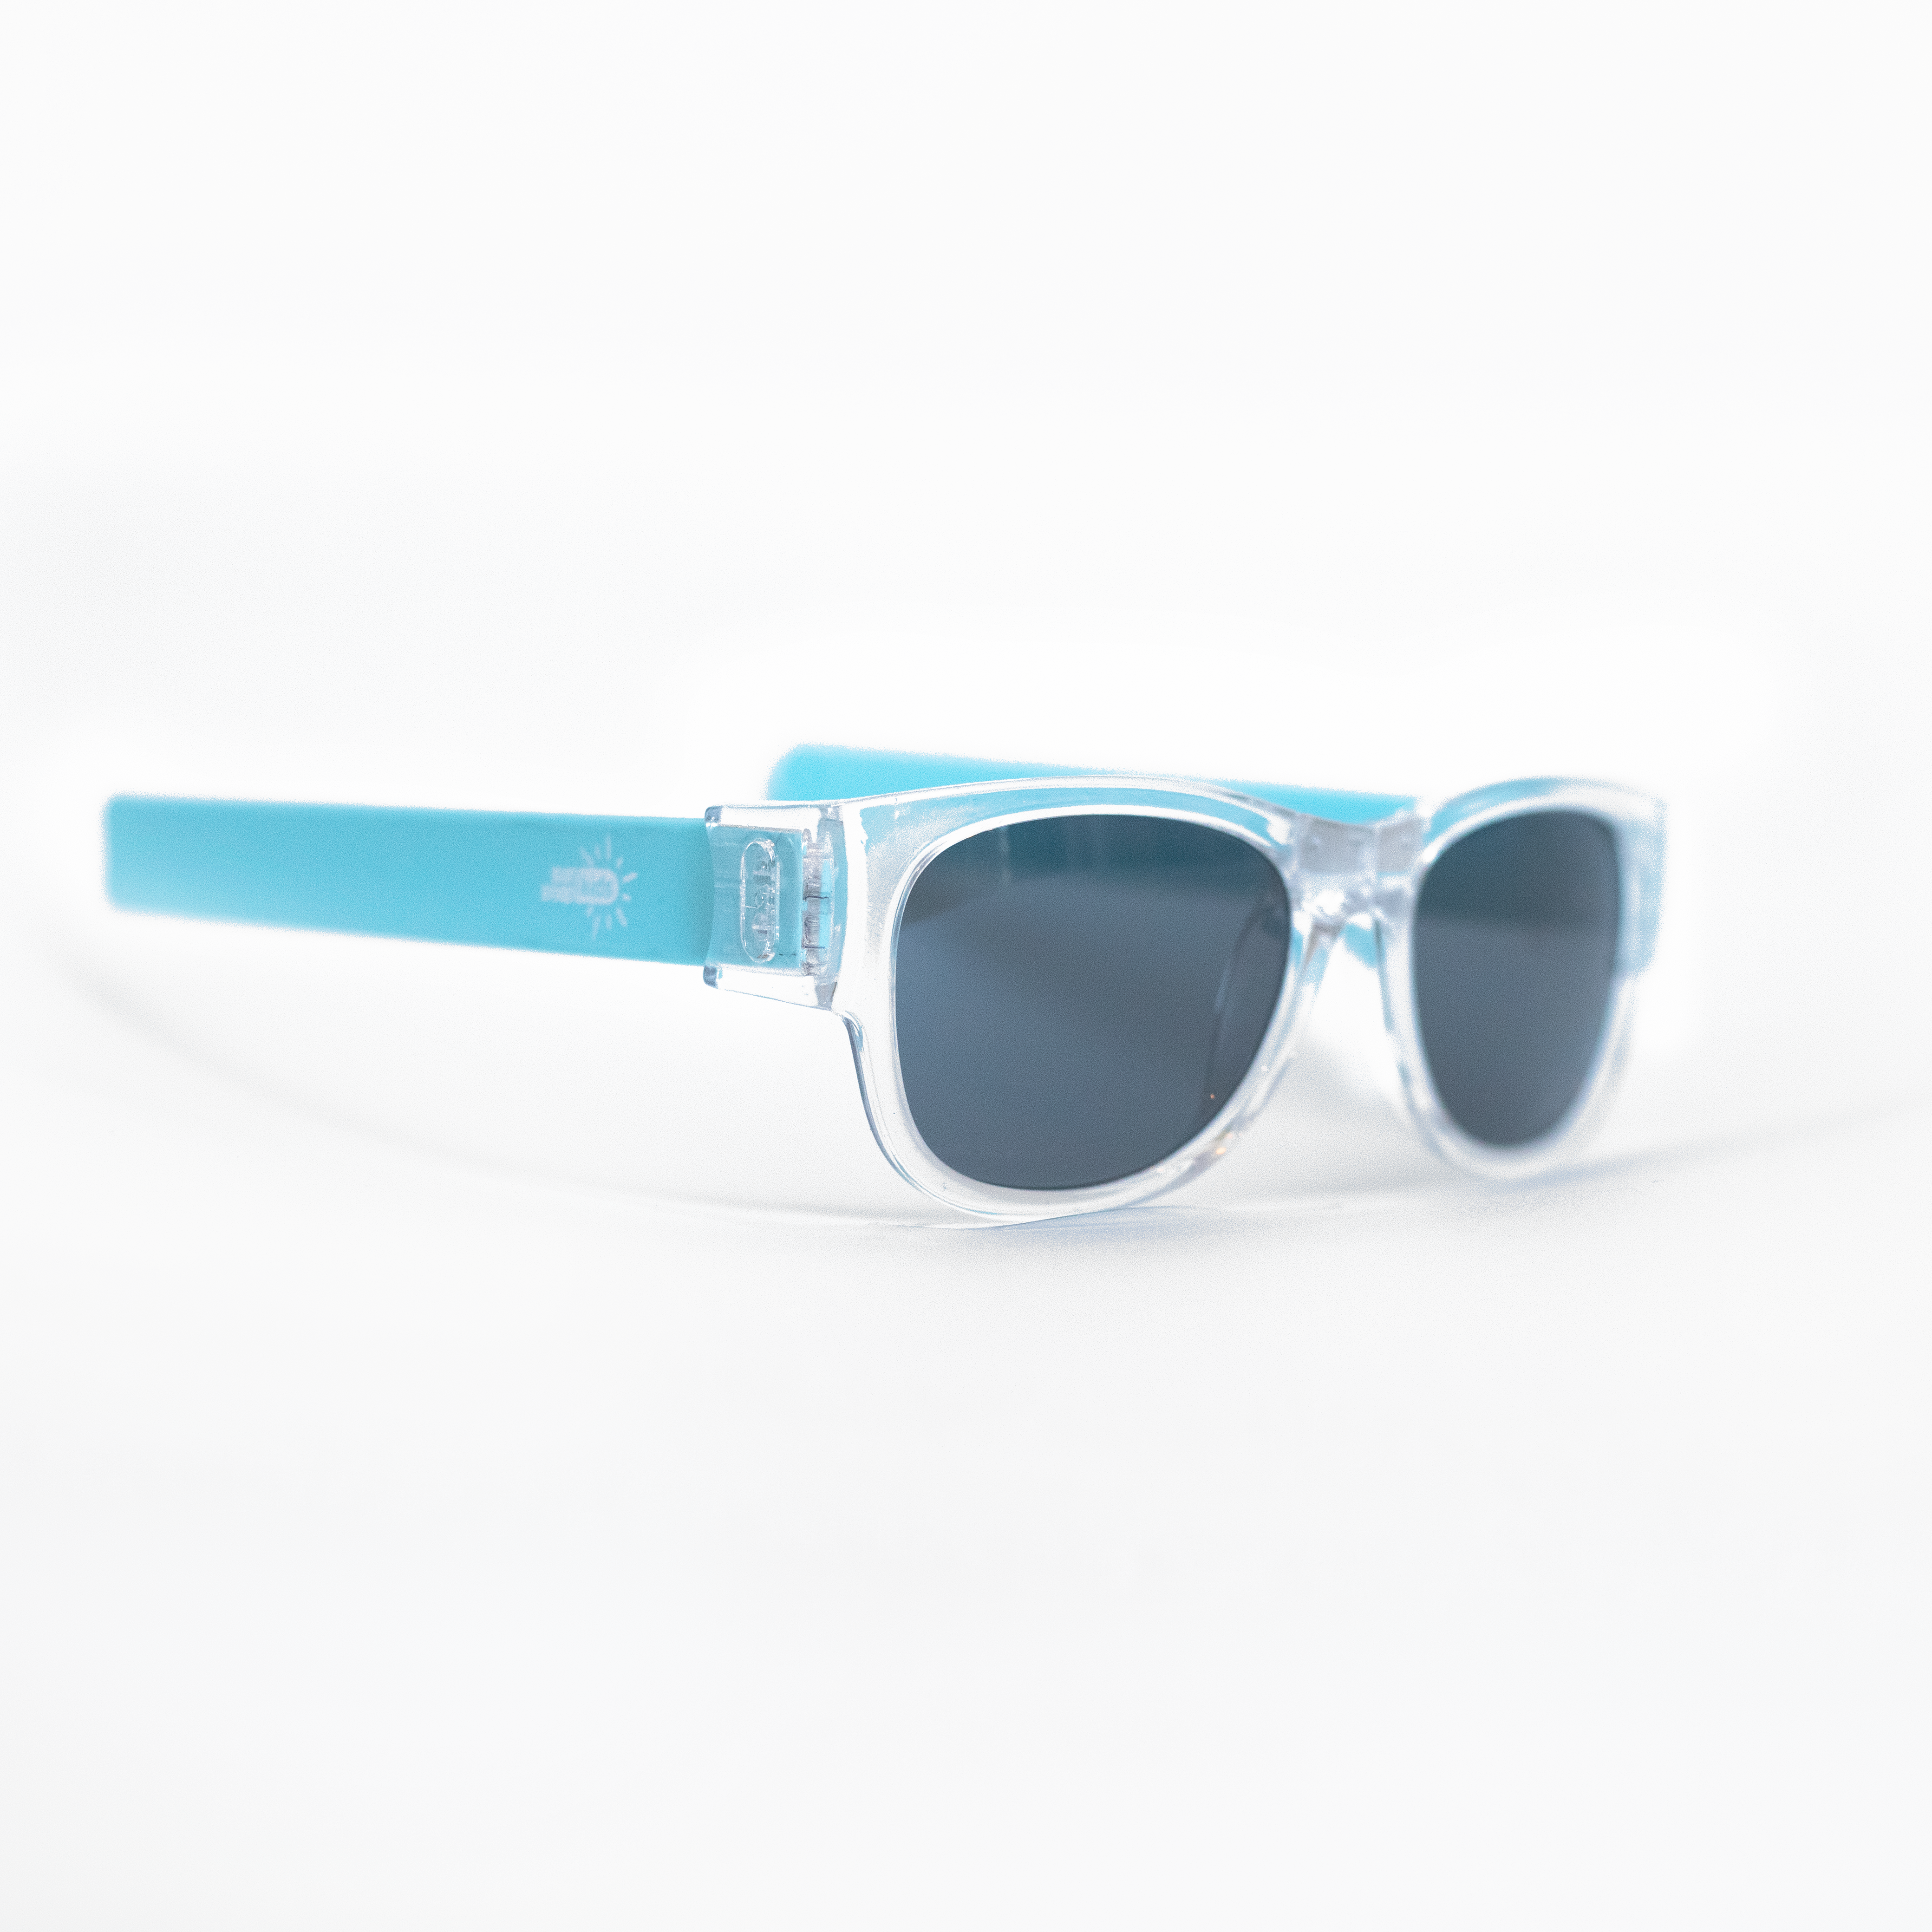 Blue Snappable Sunglasses: Original